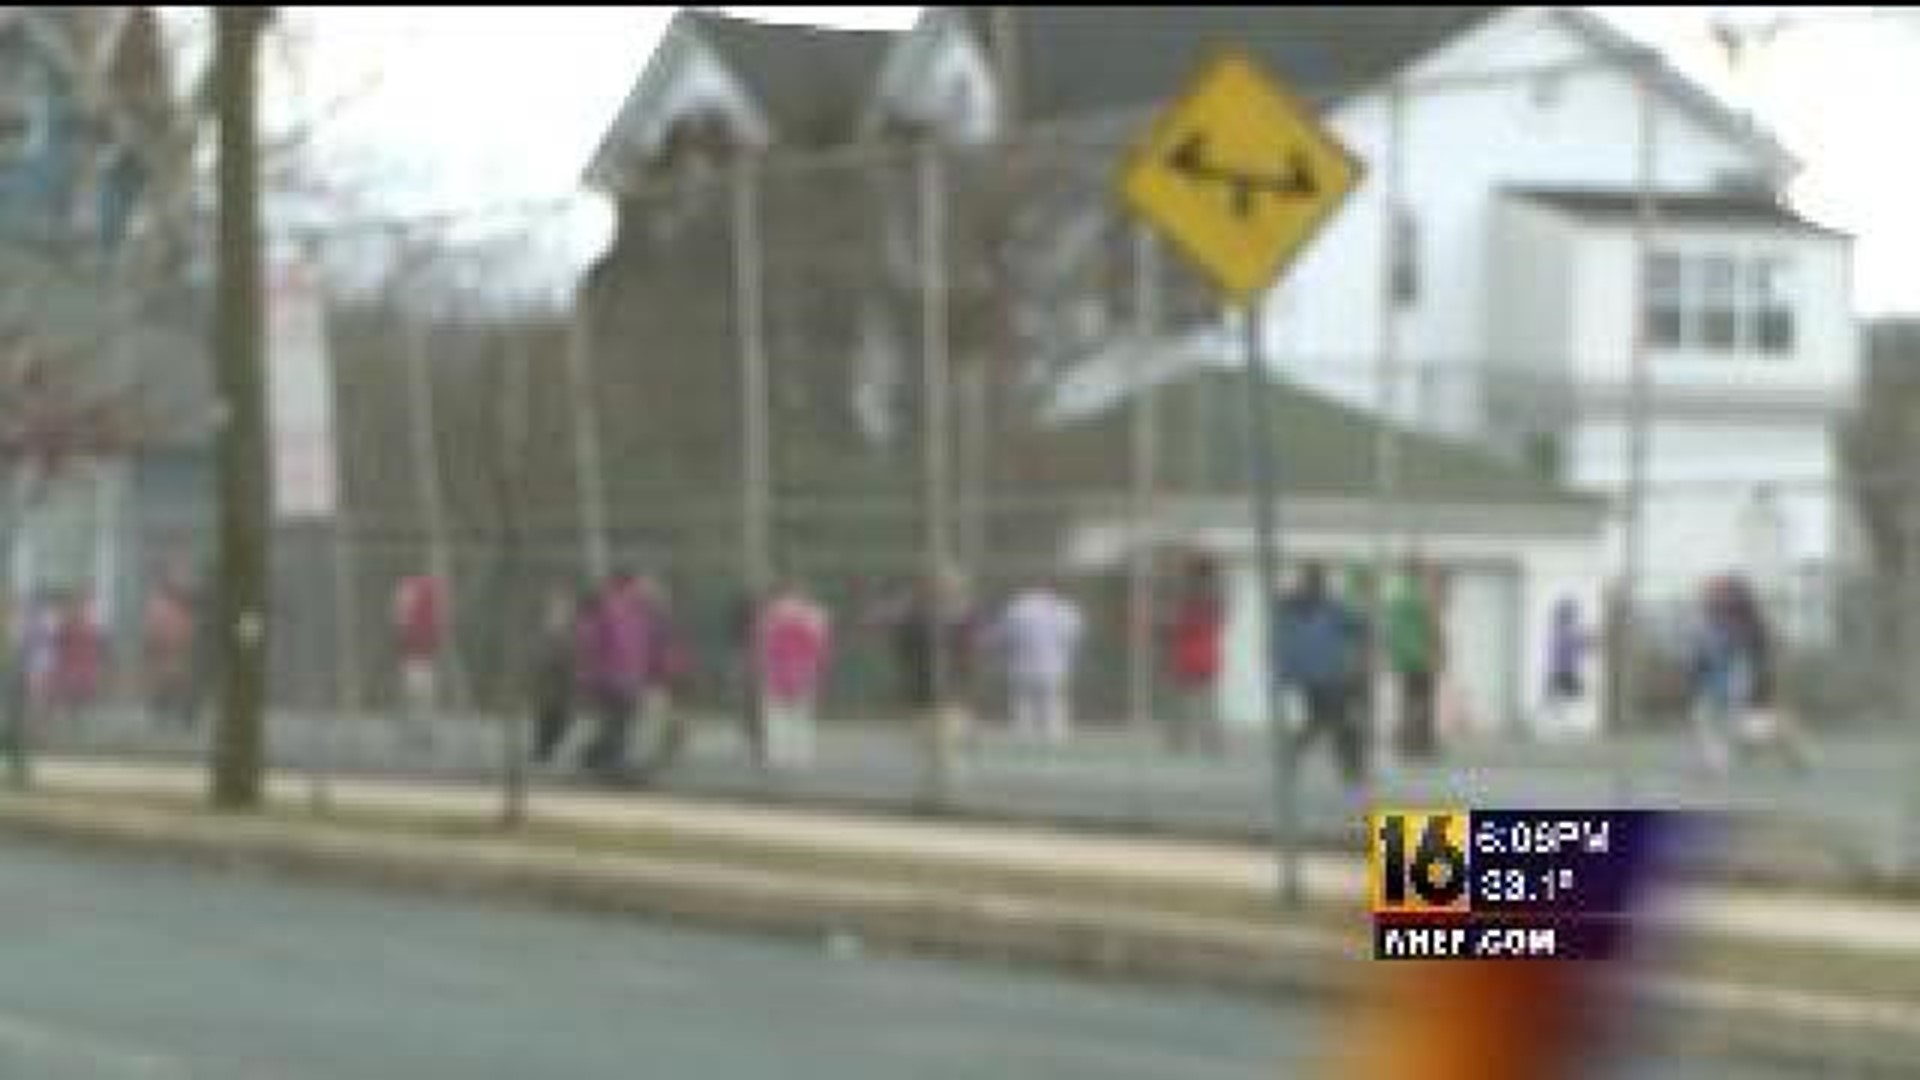 Elementary Schools Statewide On Alert After Online Threat